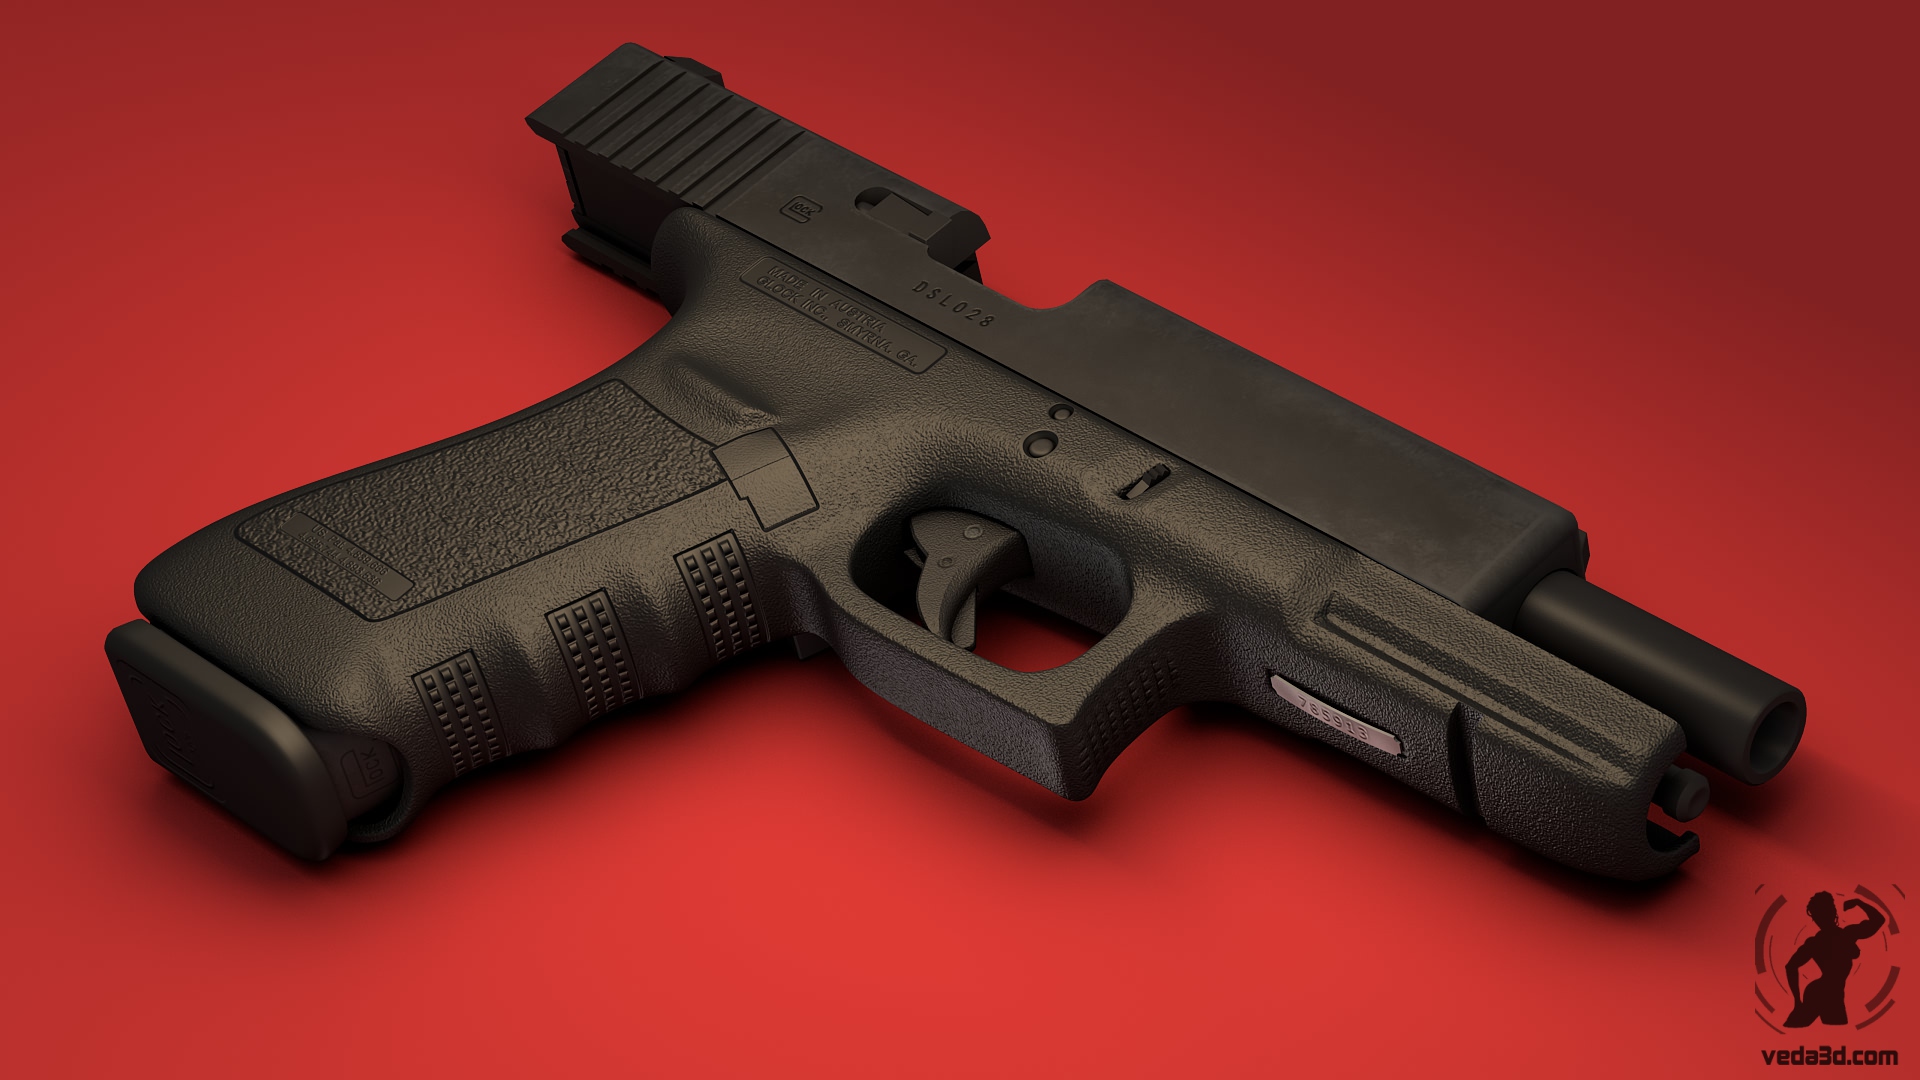 3d model of Glock 17 pistol 02